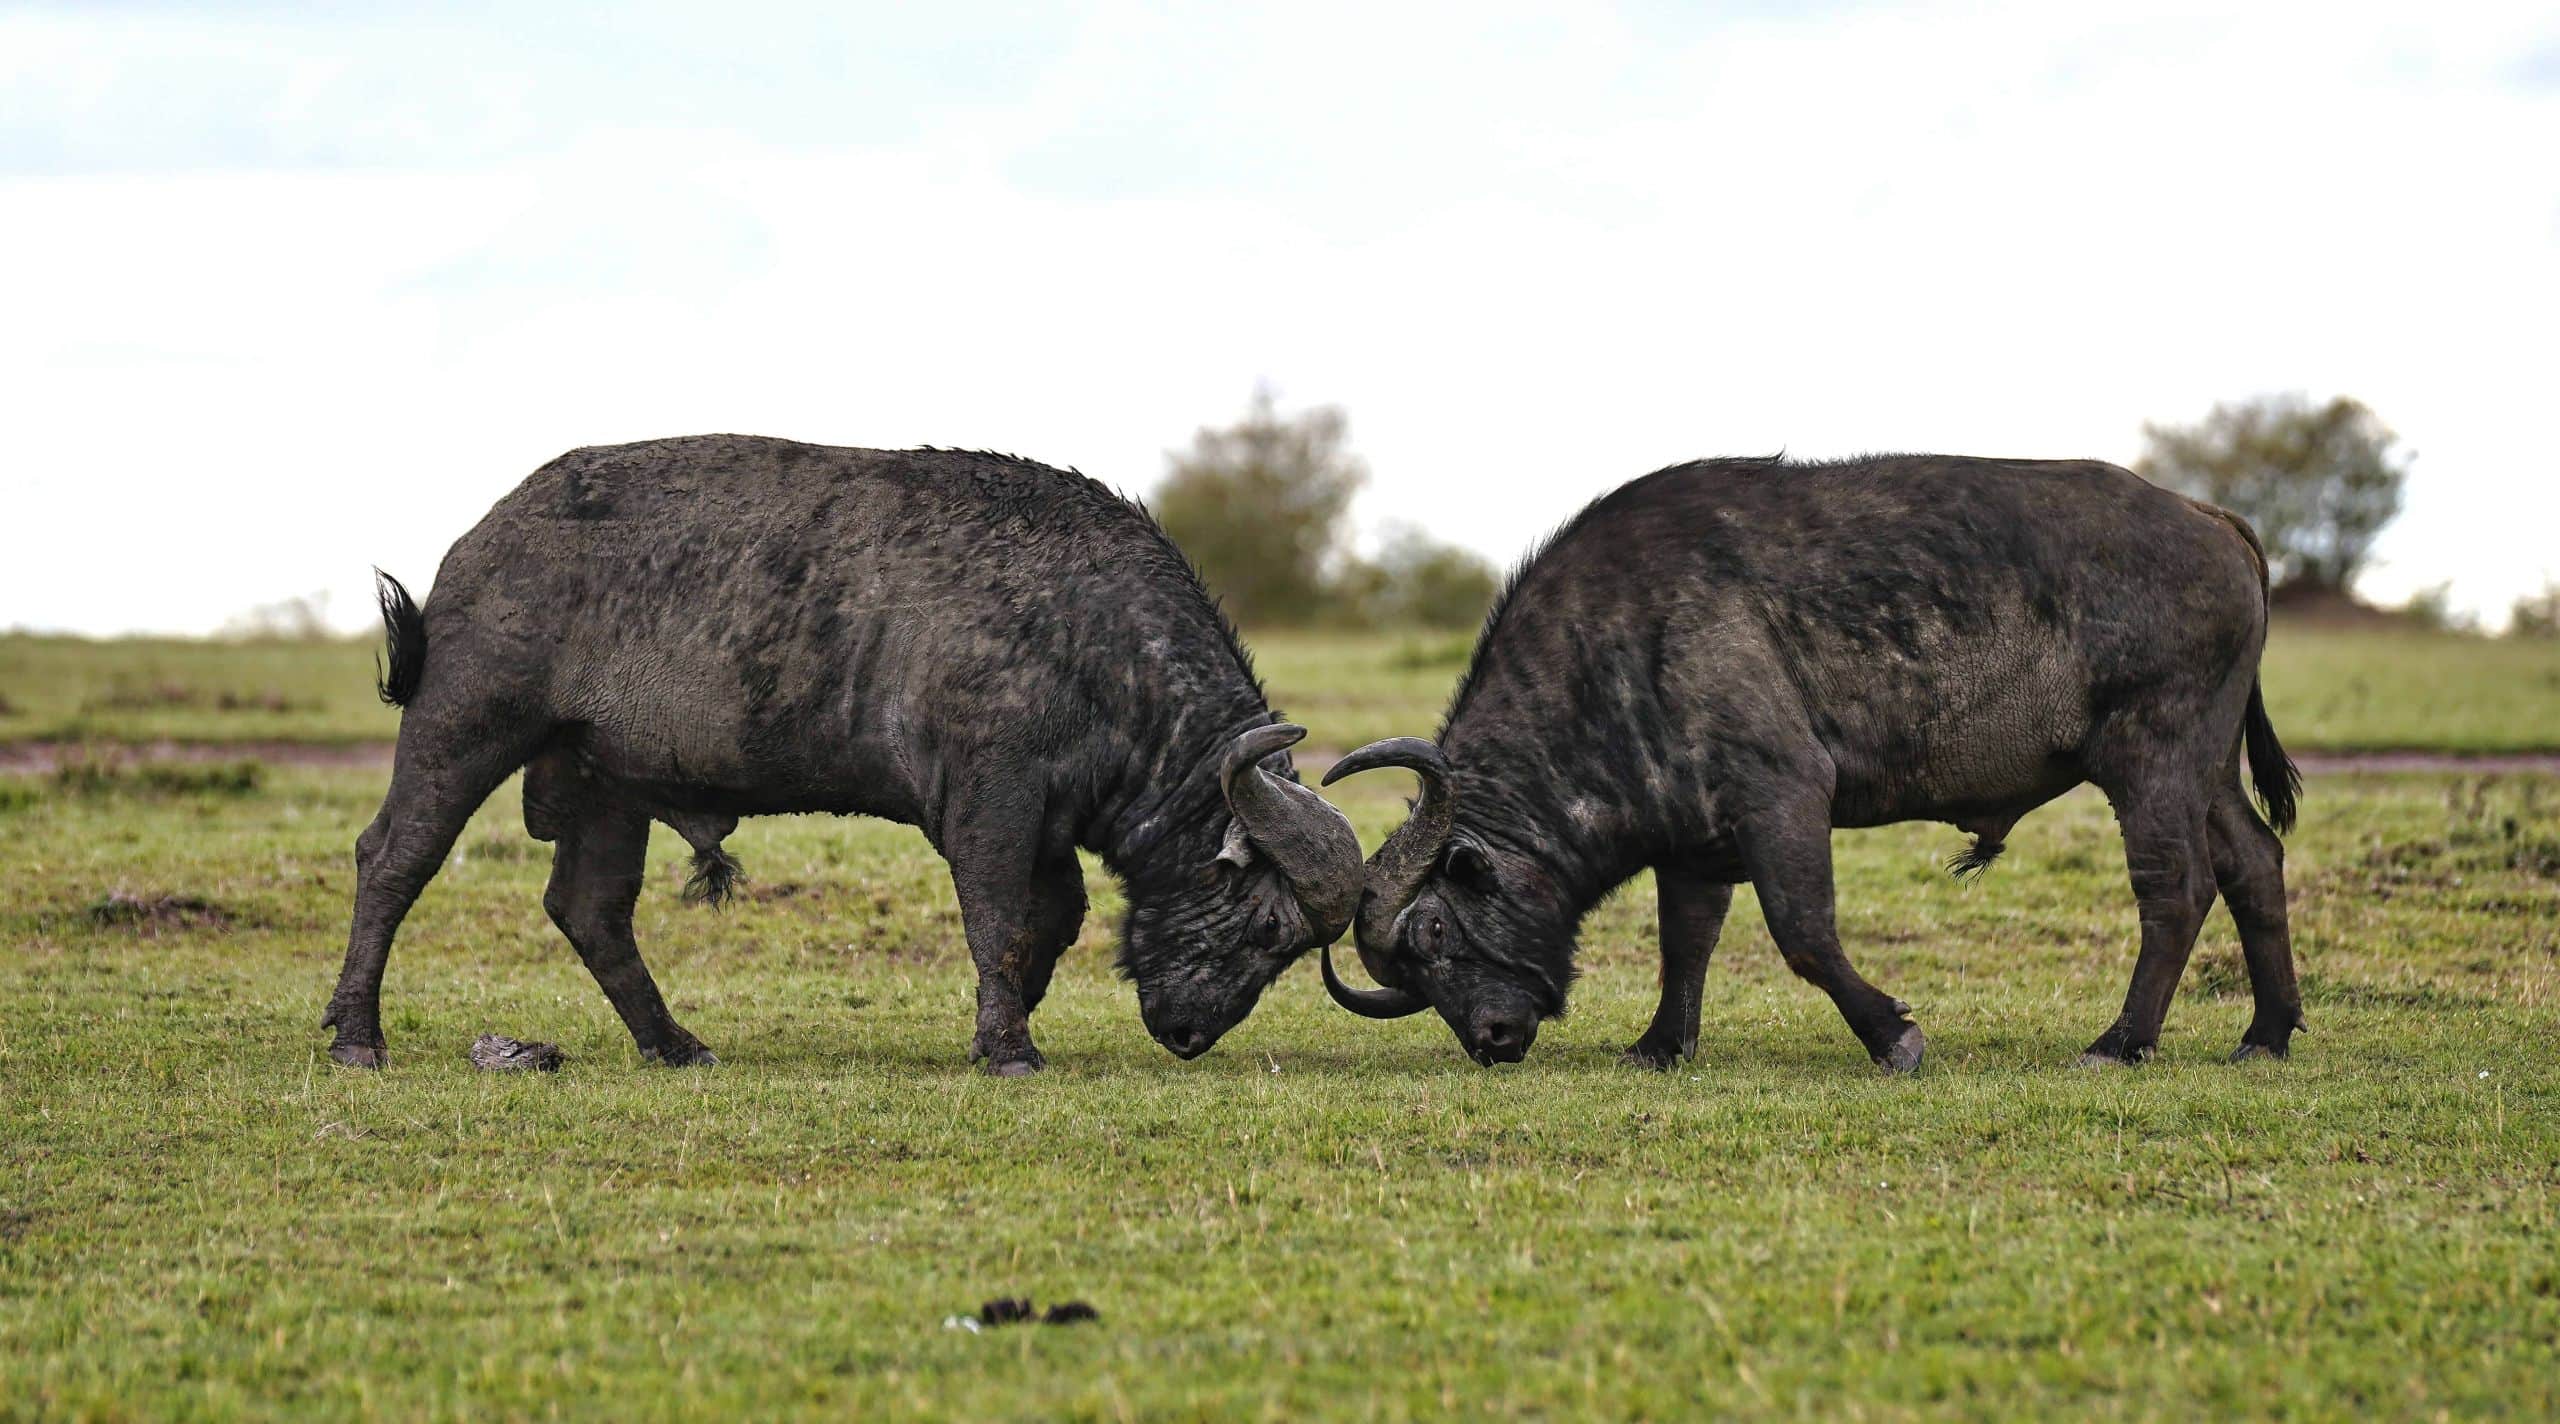 Wildlife Park Buffalo